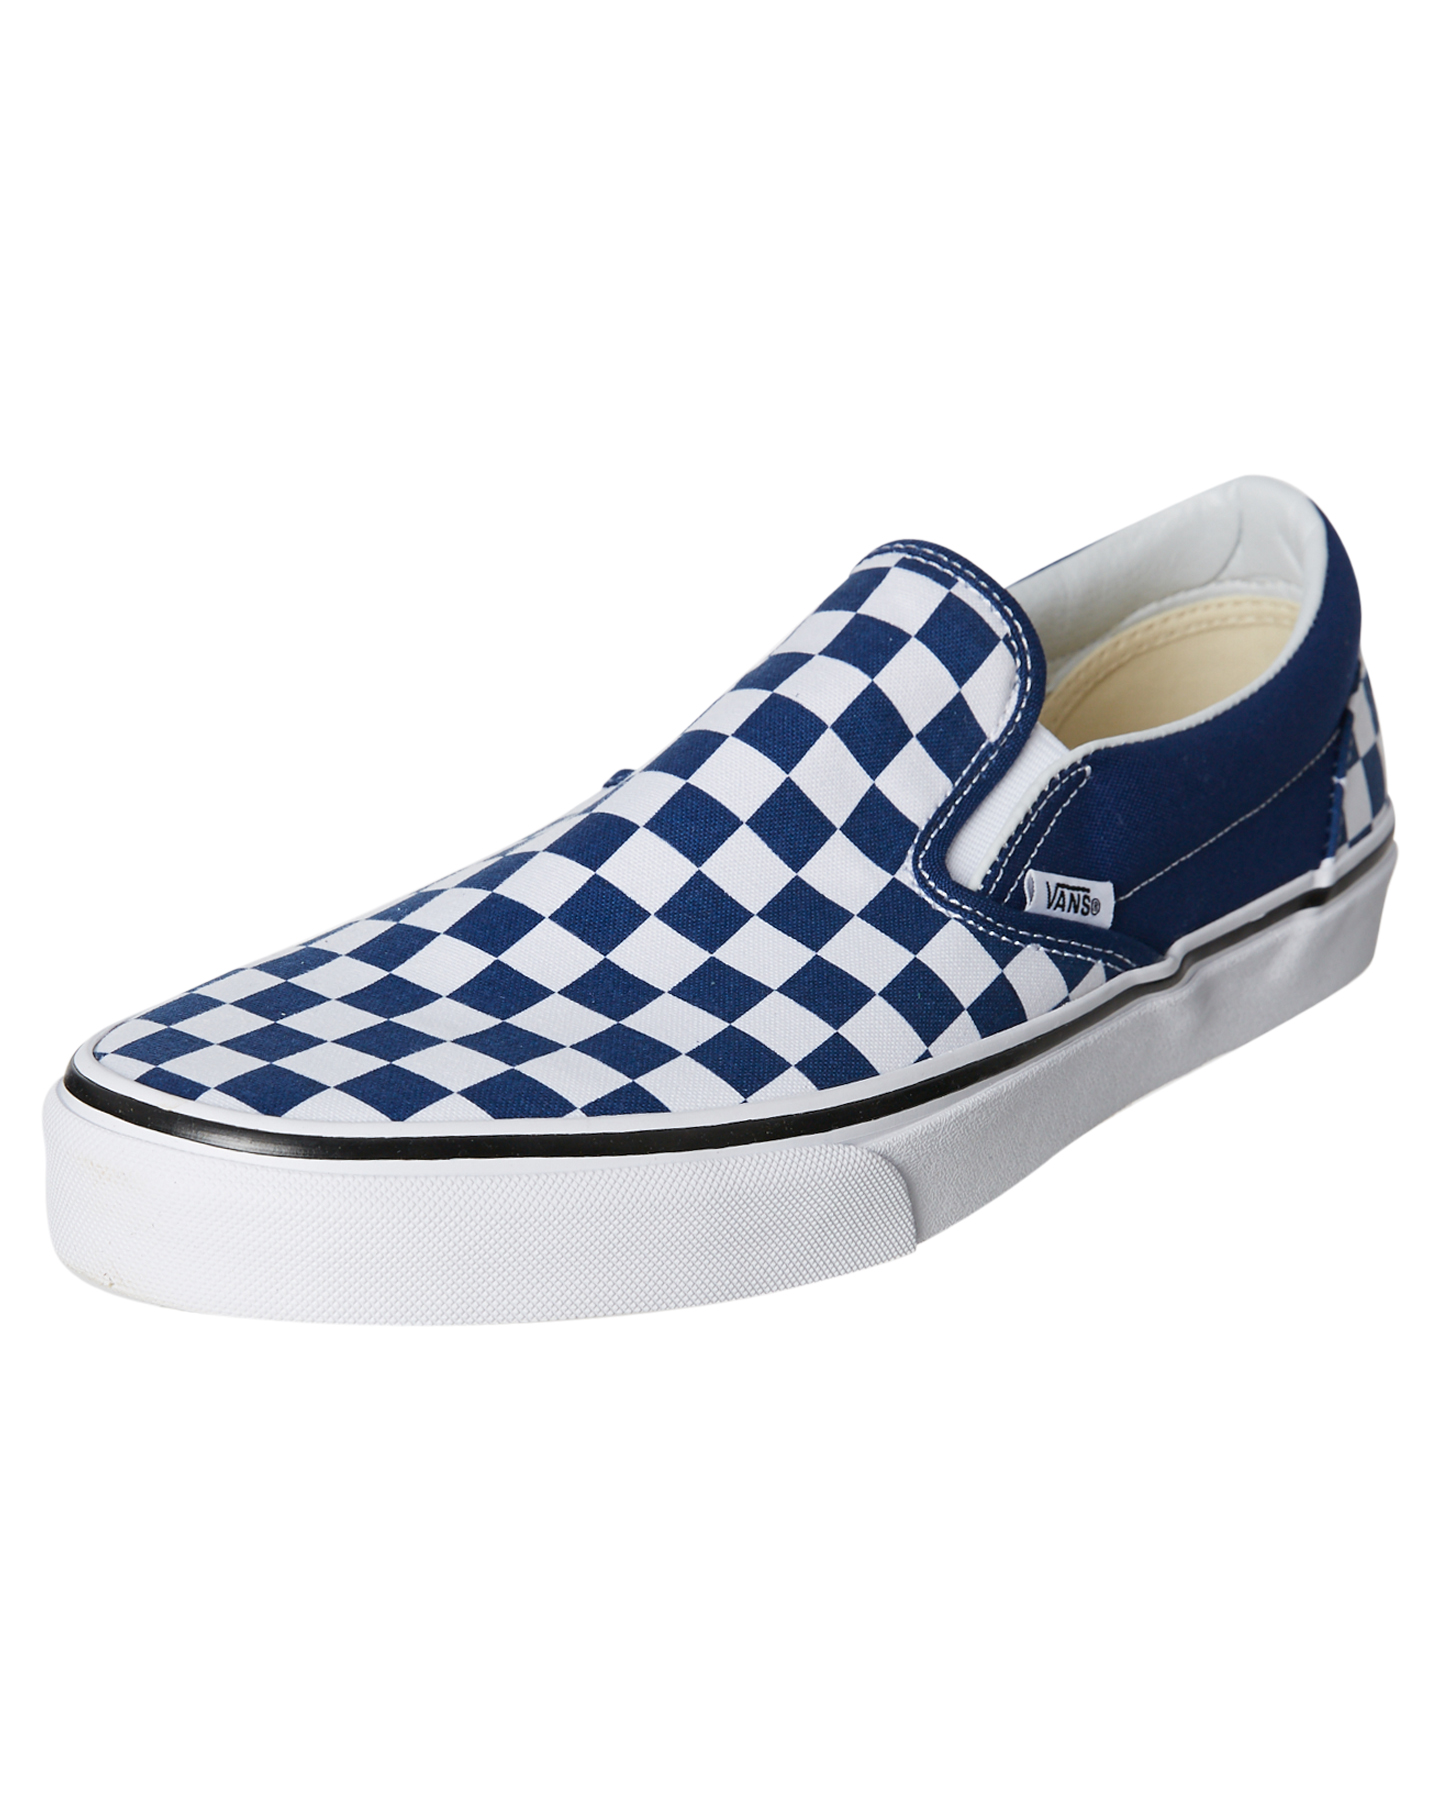 Vans Mens Classic Slip On Checkerboard Shoe - Blue ...